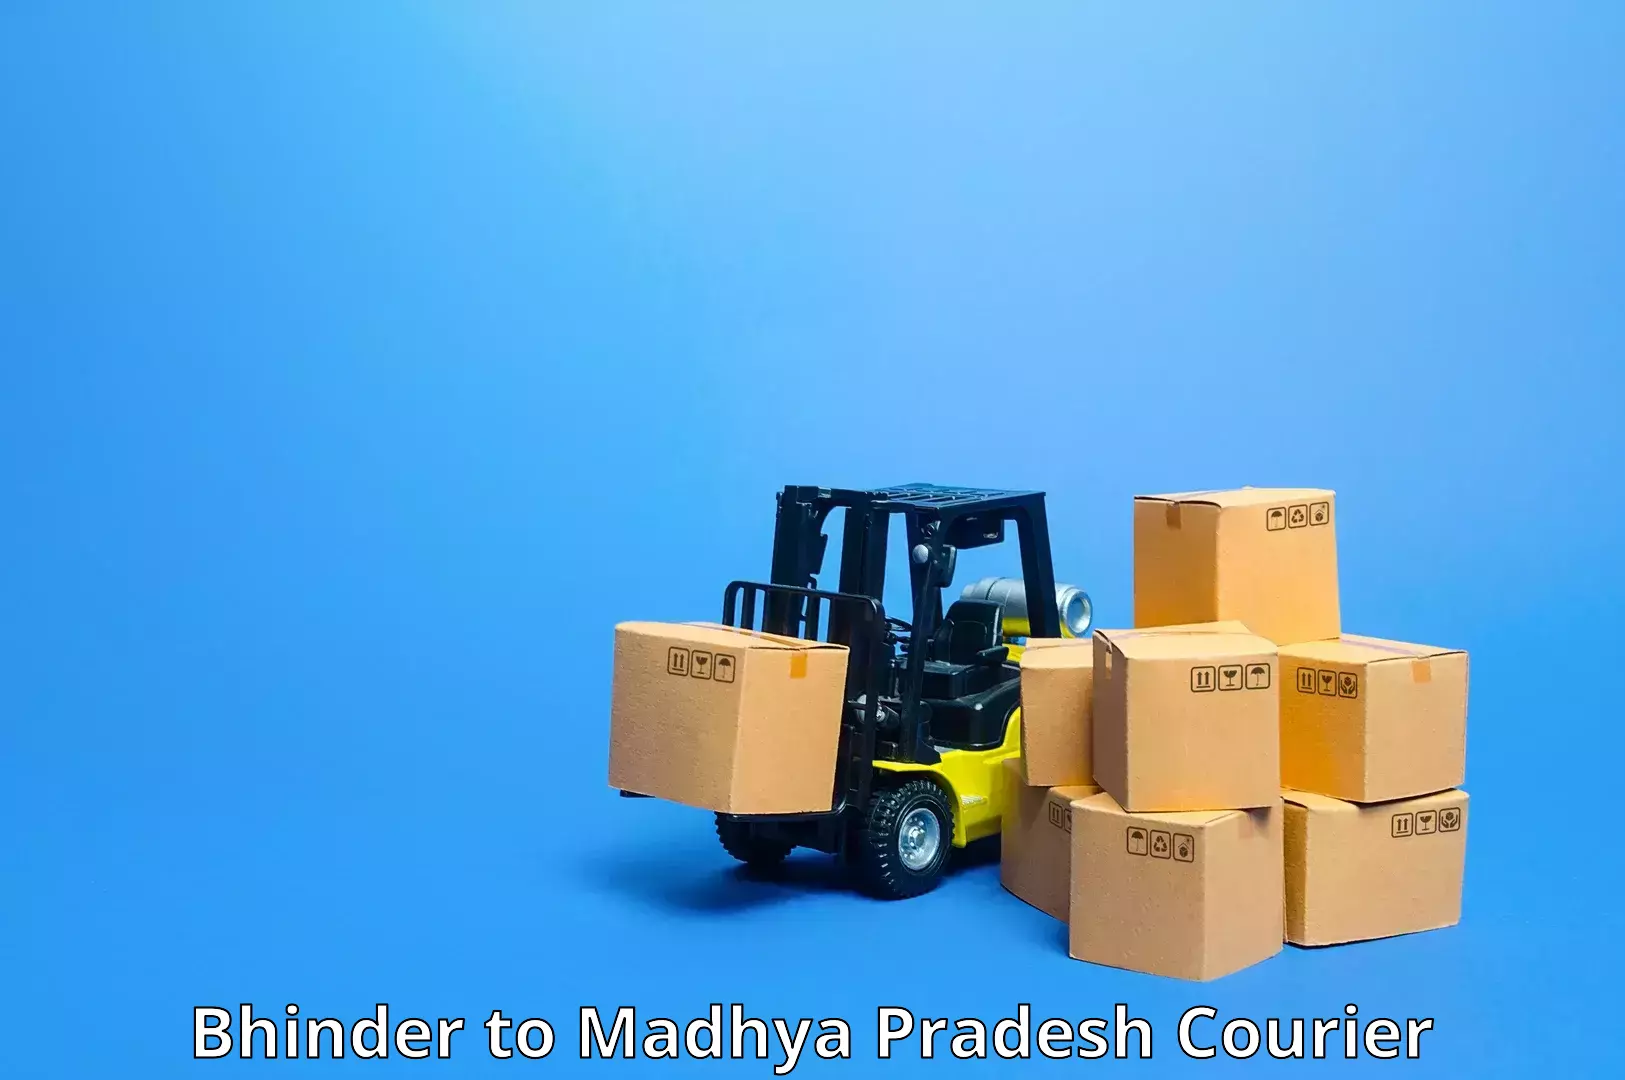 Pharmaceutical courier in Bhinder to Madhya Pradesh